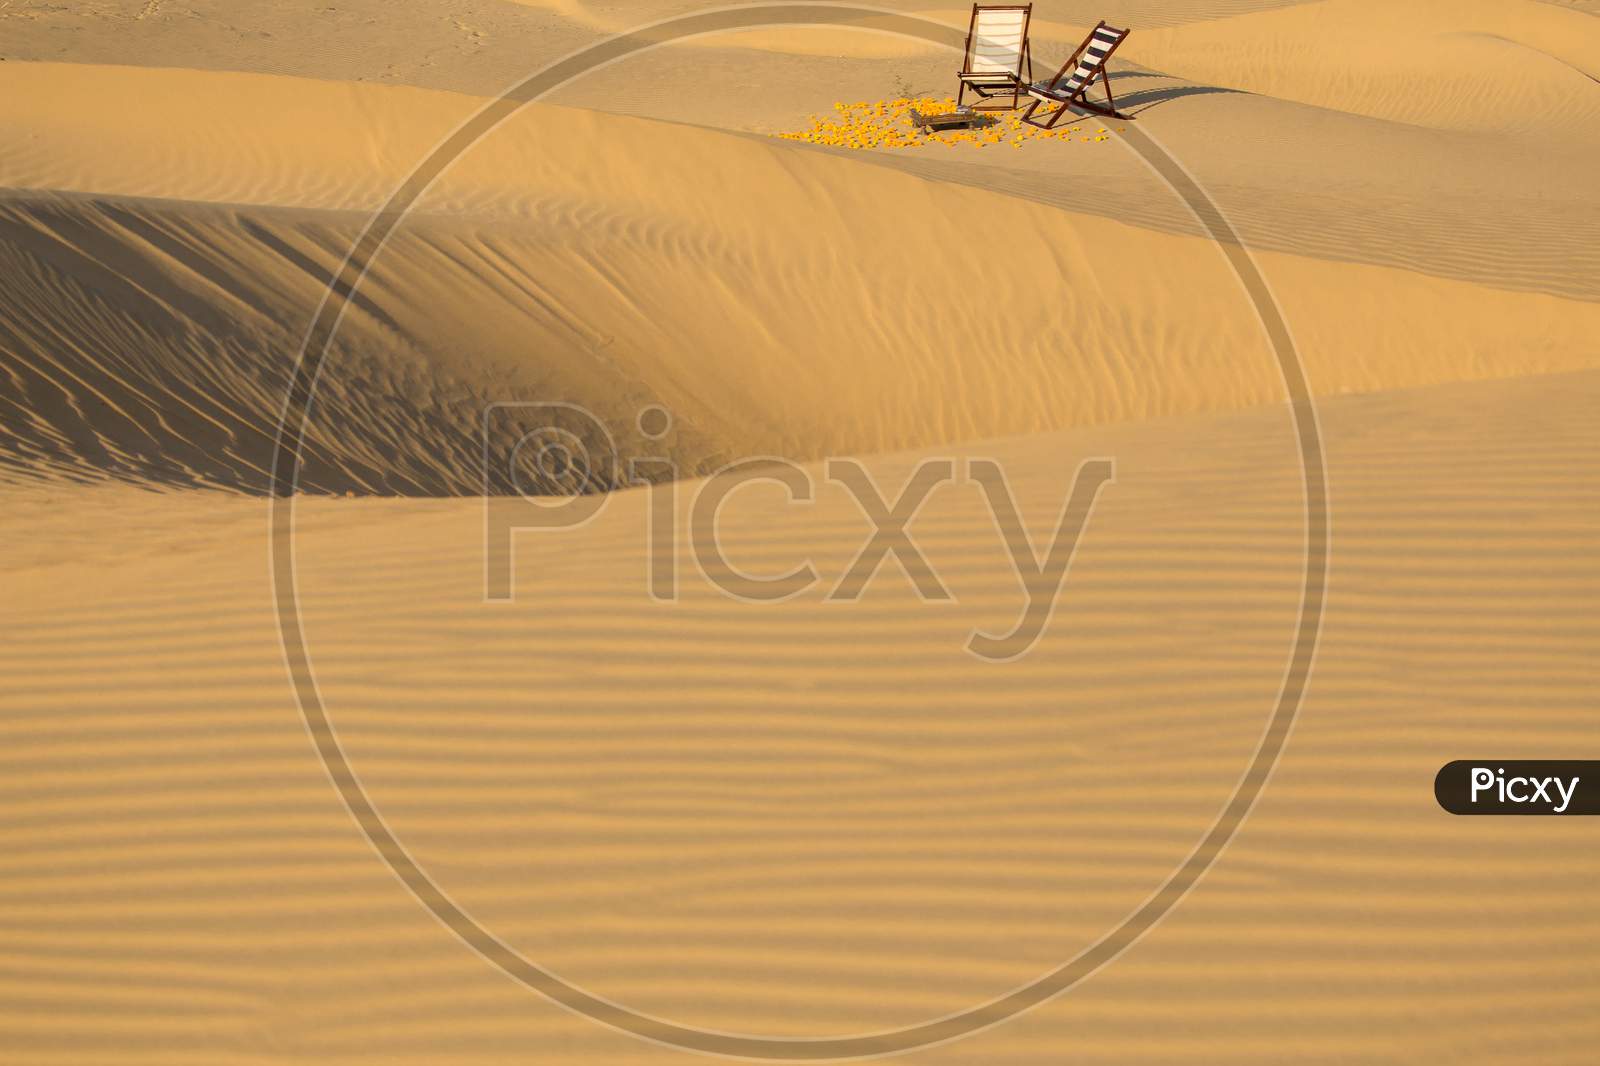 Wooden Chairs At Dessert Sand Dunes